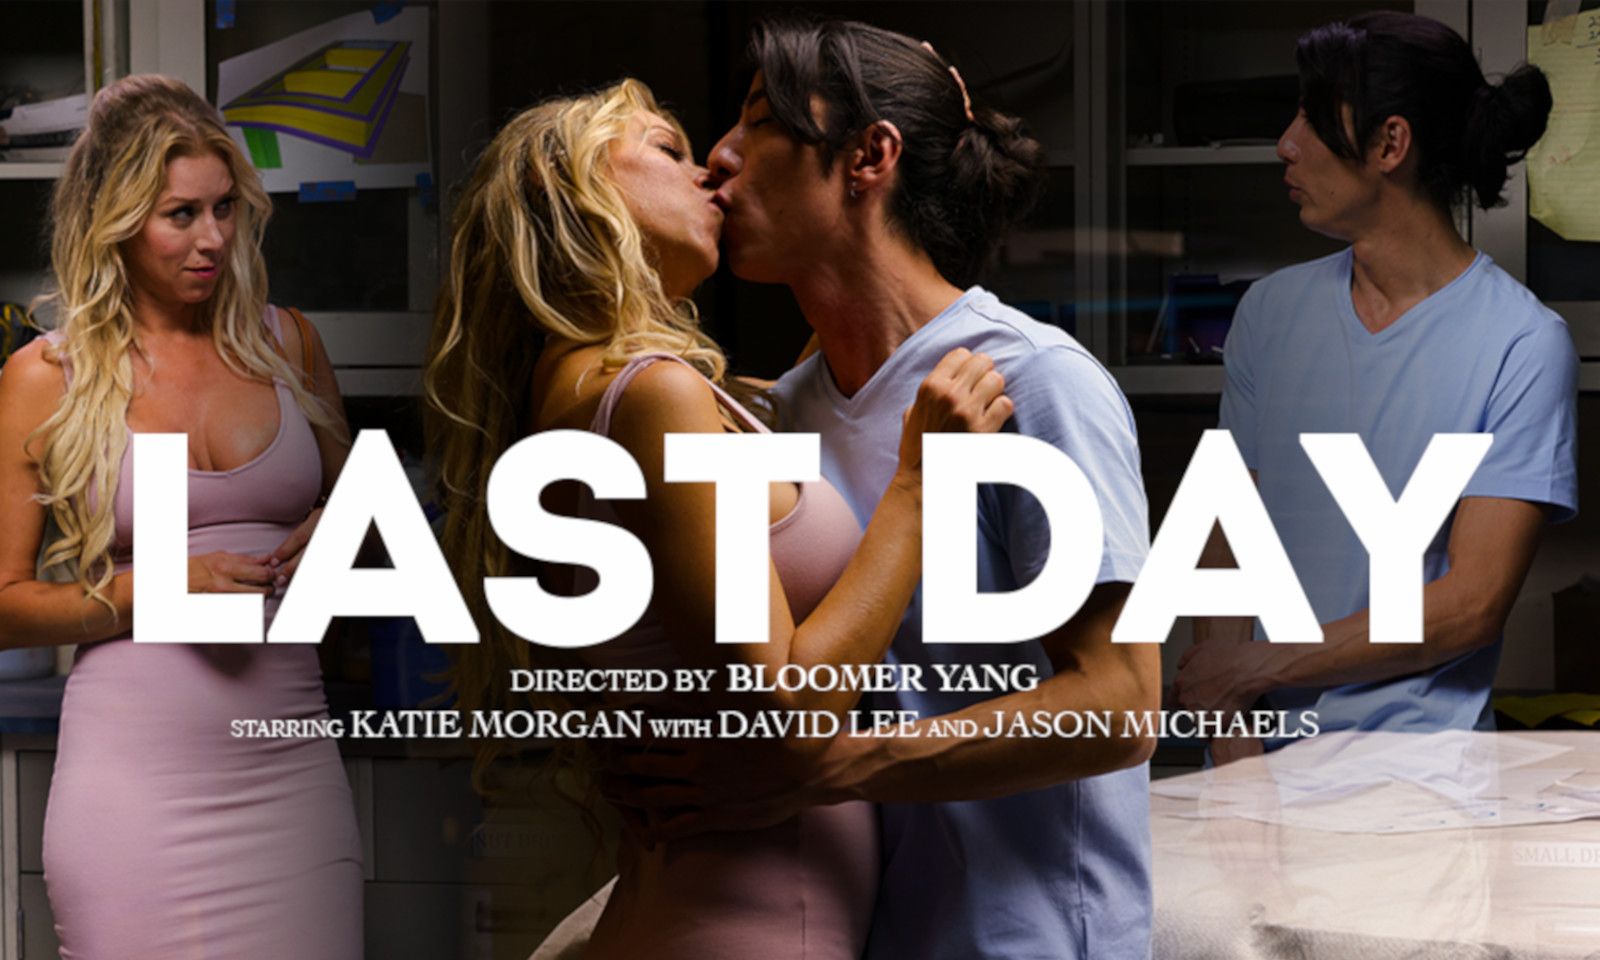 Katie Morgan Headlines Delphine Films' 'Last Day' | AVN